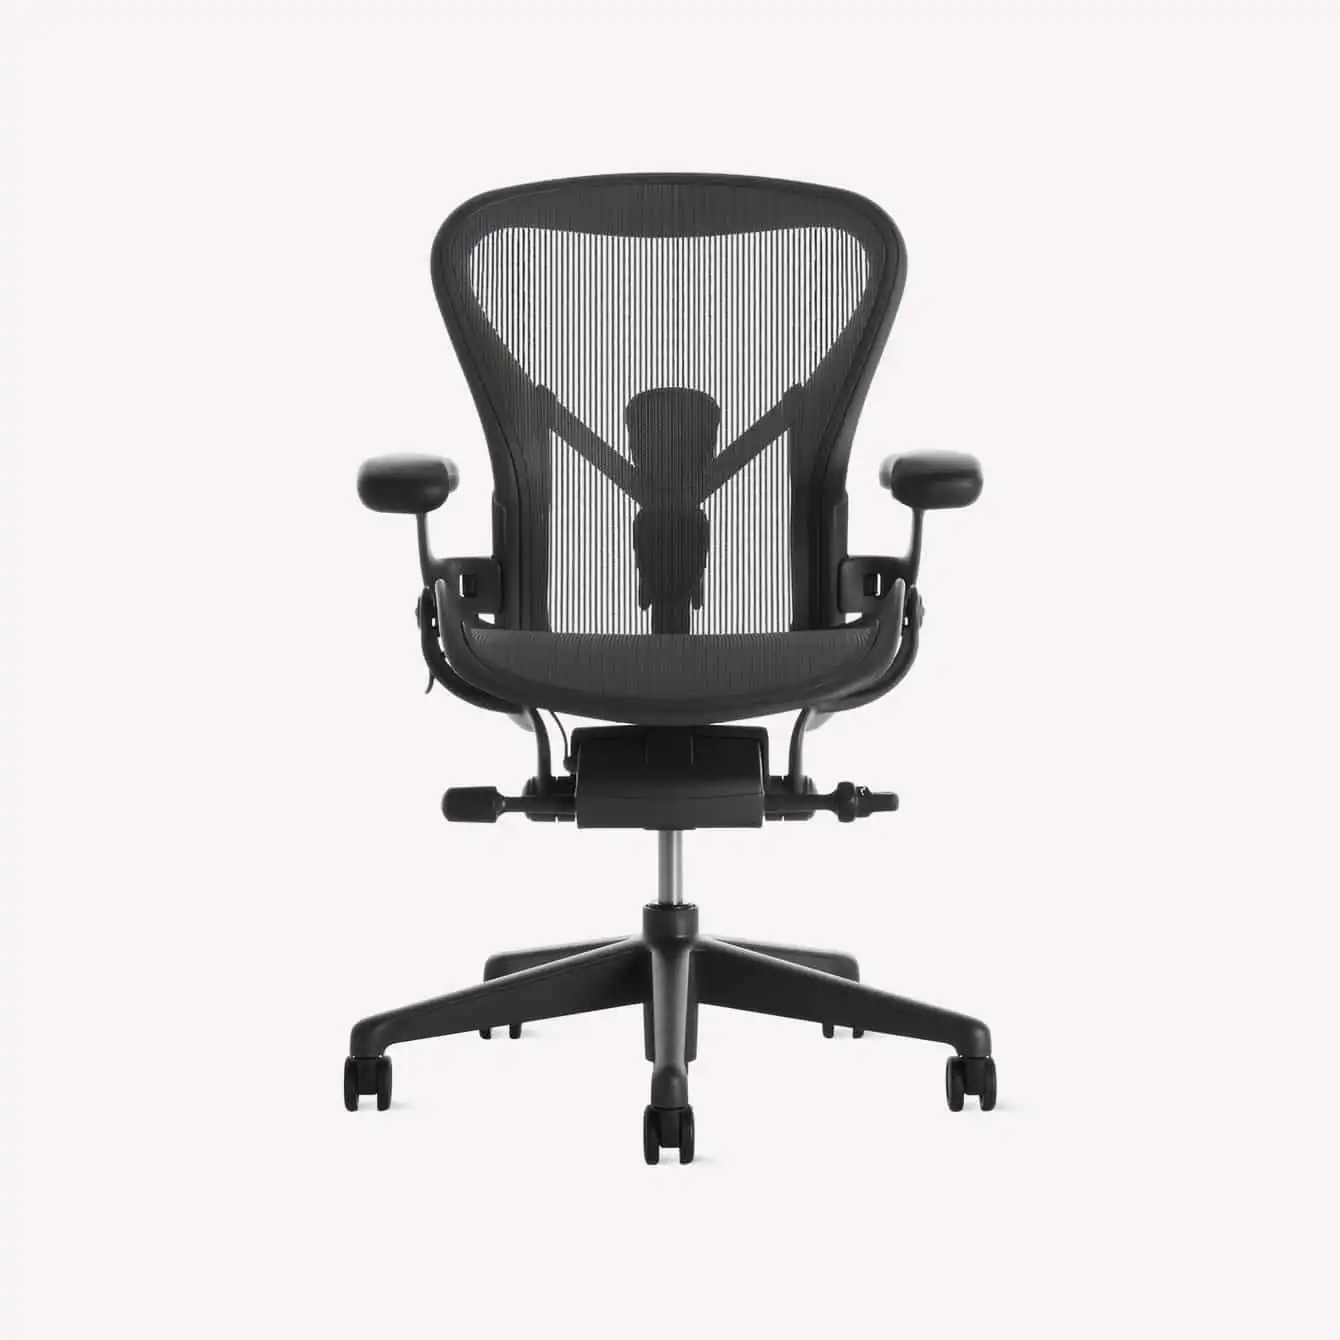 https://www.themodestman.com/wp-content/uploads/2021/06/Herman-Miller-Aeron-Size-A-Chair.webp